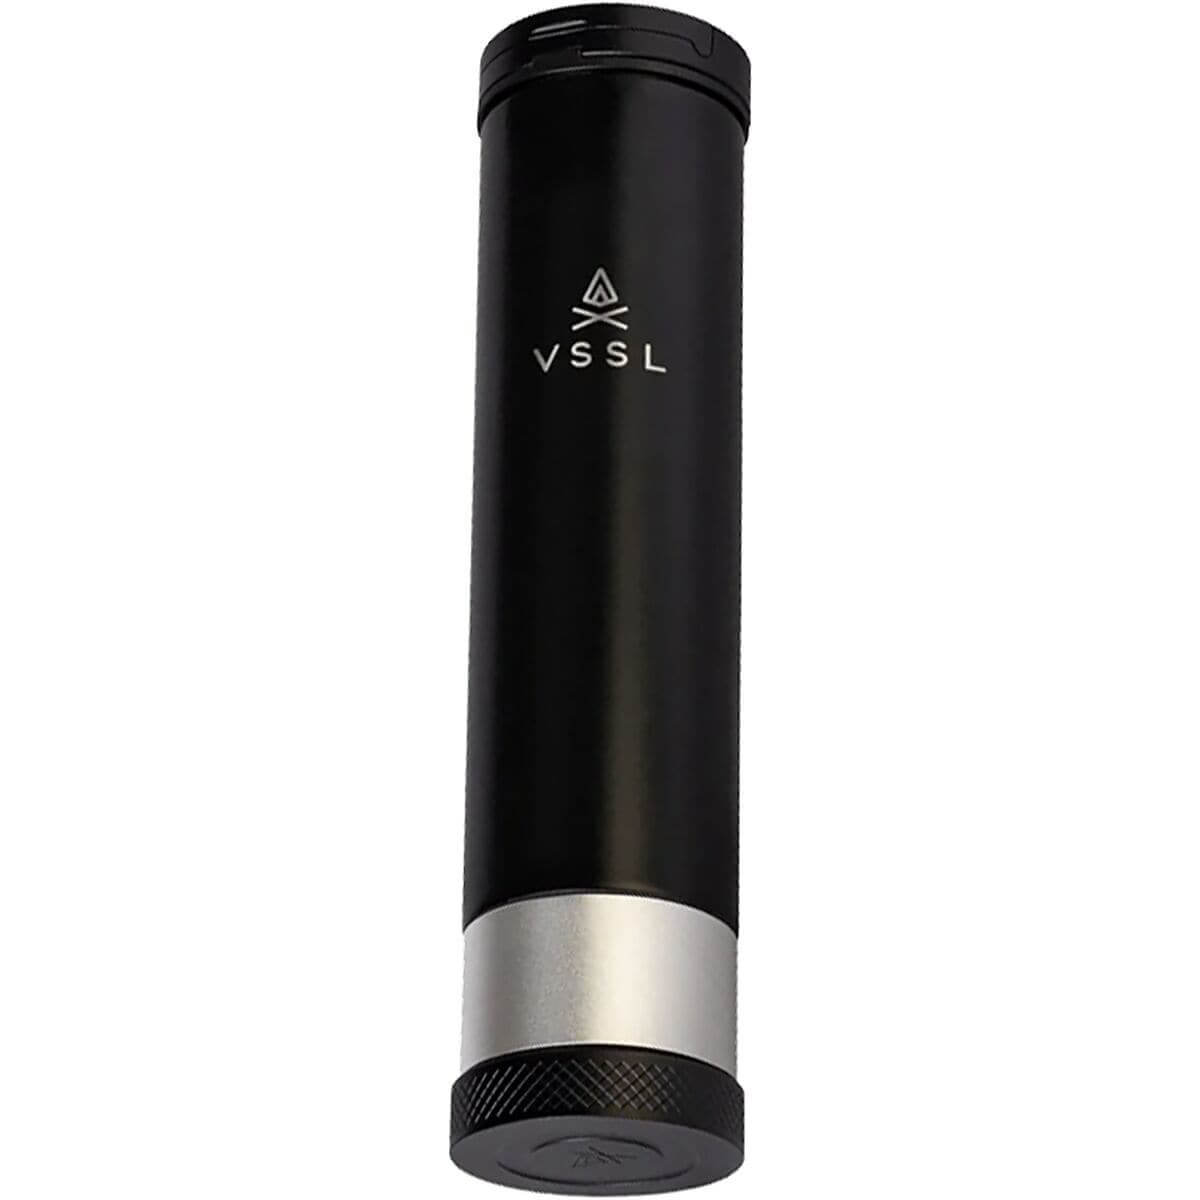 Фляга VSSL Insulated Flask, черный фляга vssl insulated flask черный